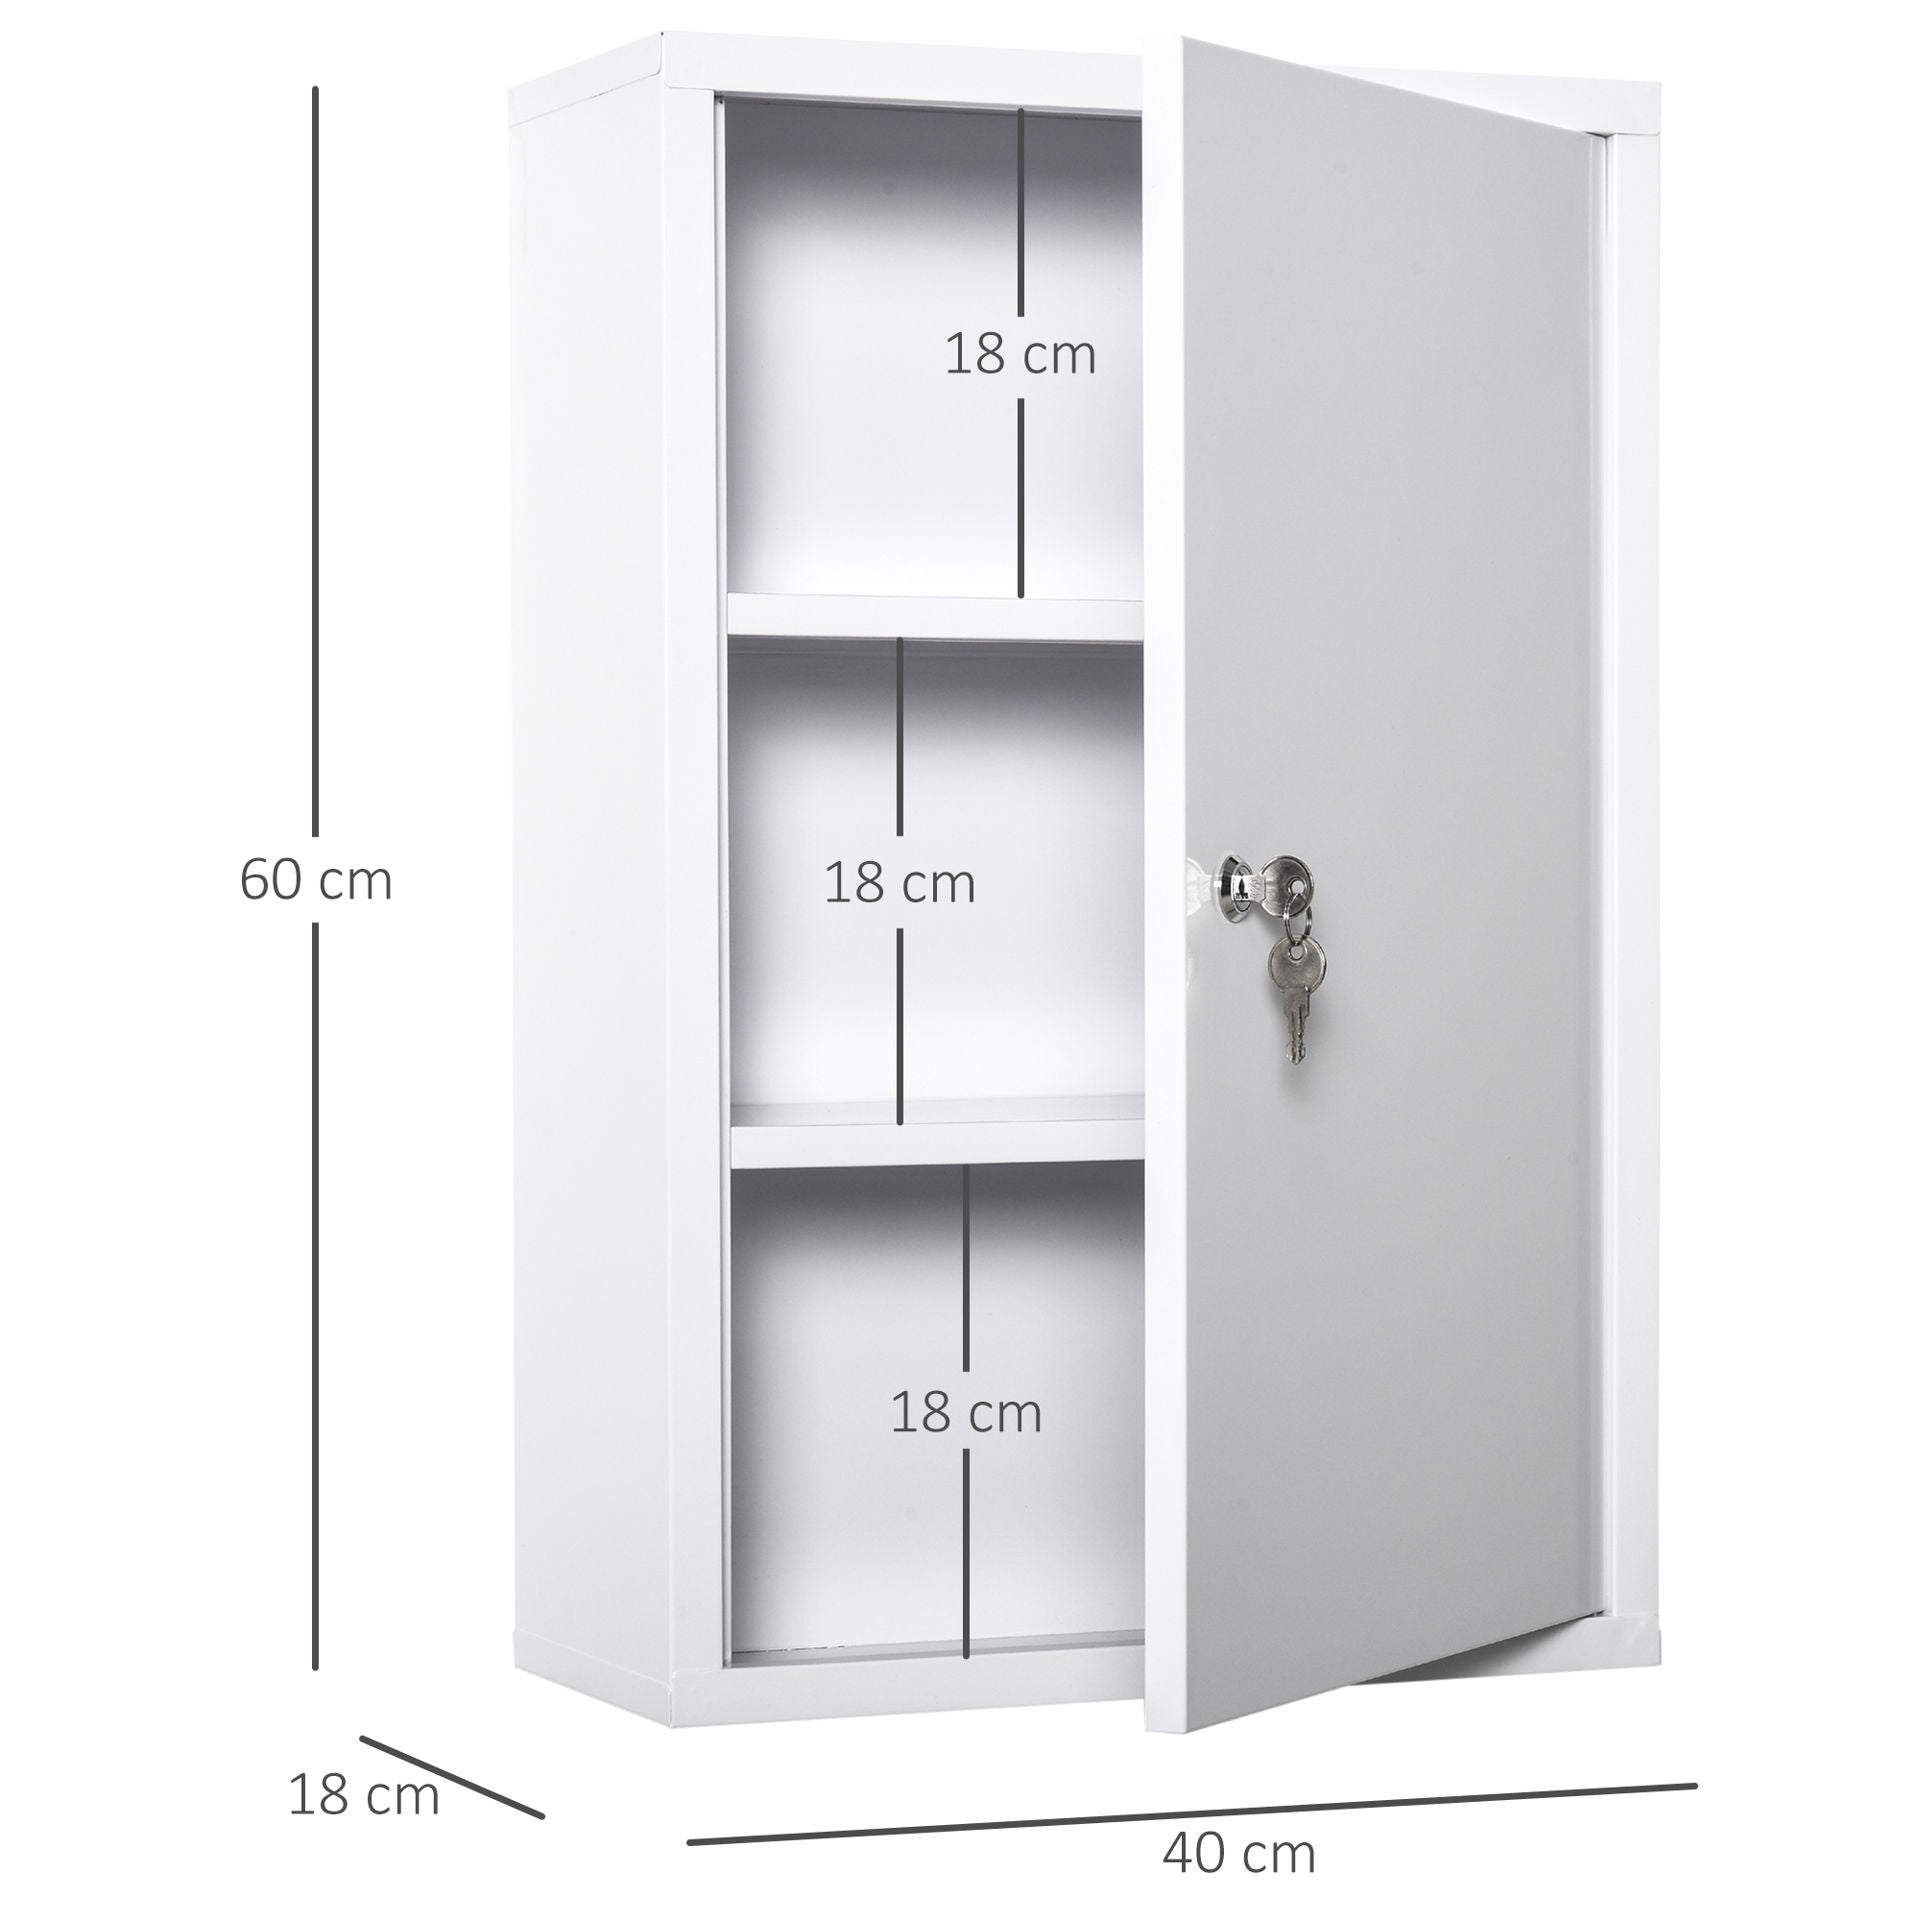 Nancy's Jimmy Cut Medicine Cabinet - White - Steel - 15.74 cm x 7.08 cm x 23.62 cm